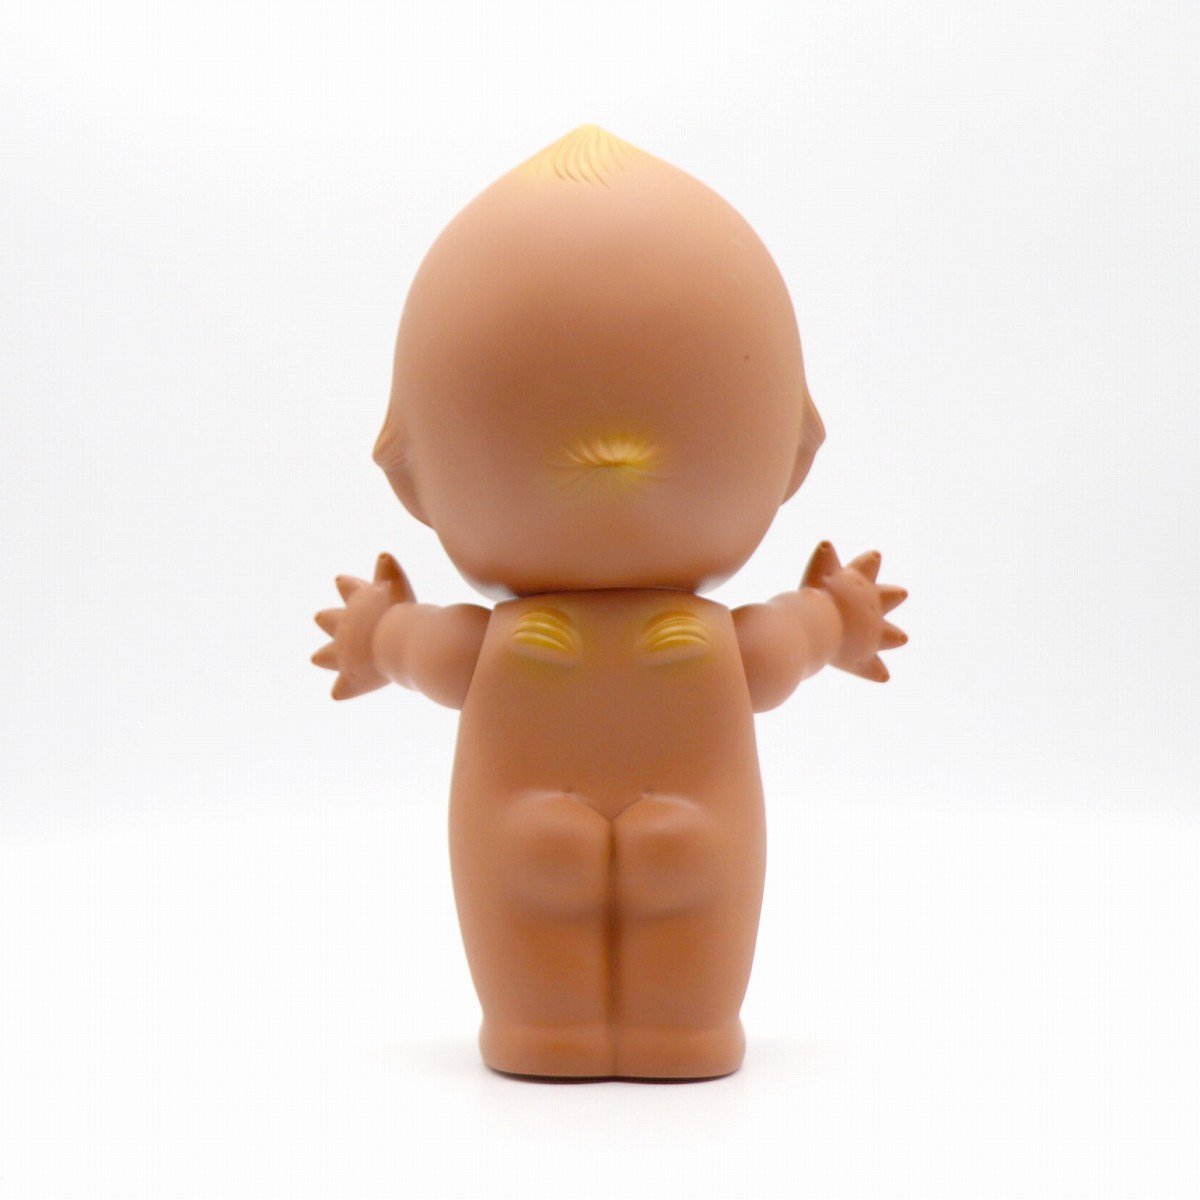  коричневый пупс кукла * sofvi кукла * игрушка * игрушка *No.220514-42* размер упаковки 80